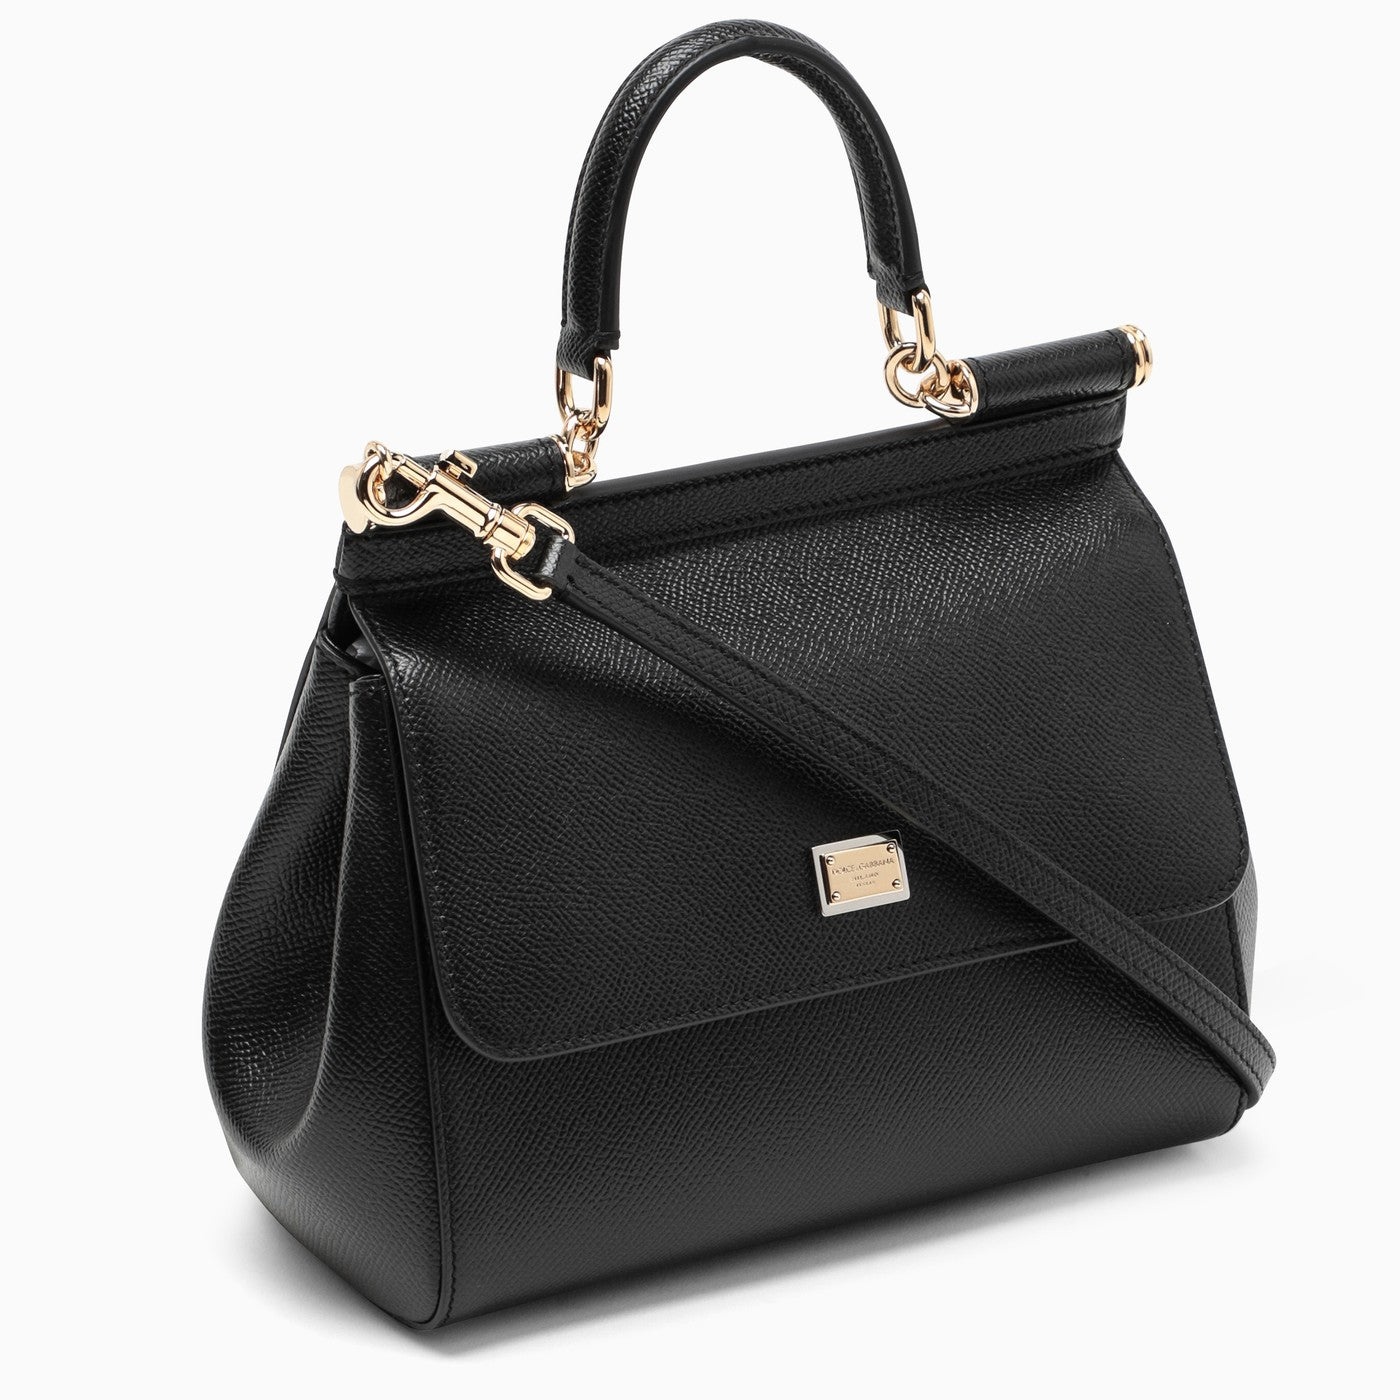 Dolce&Gabbana Black Sicily Small Handbag - 2